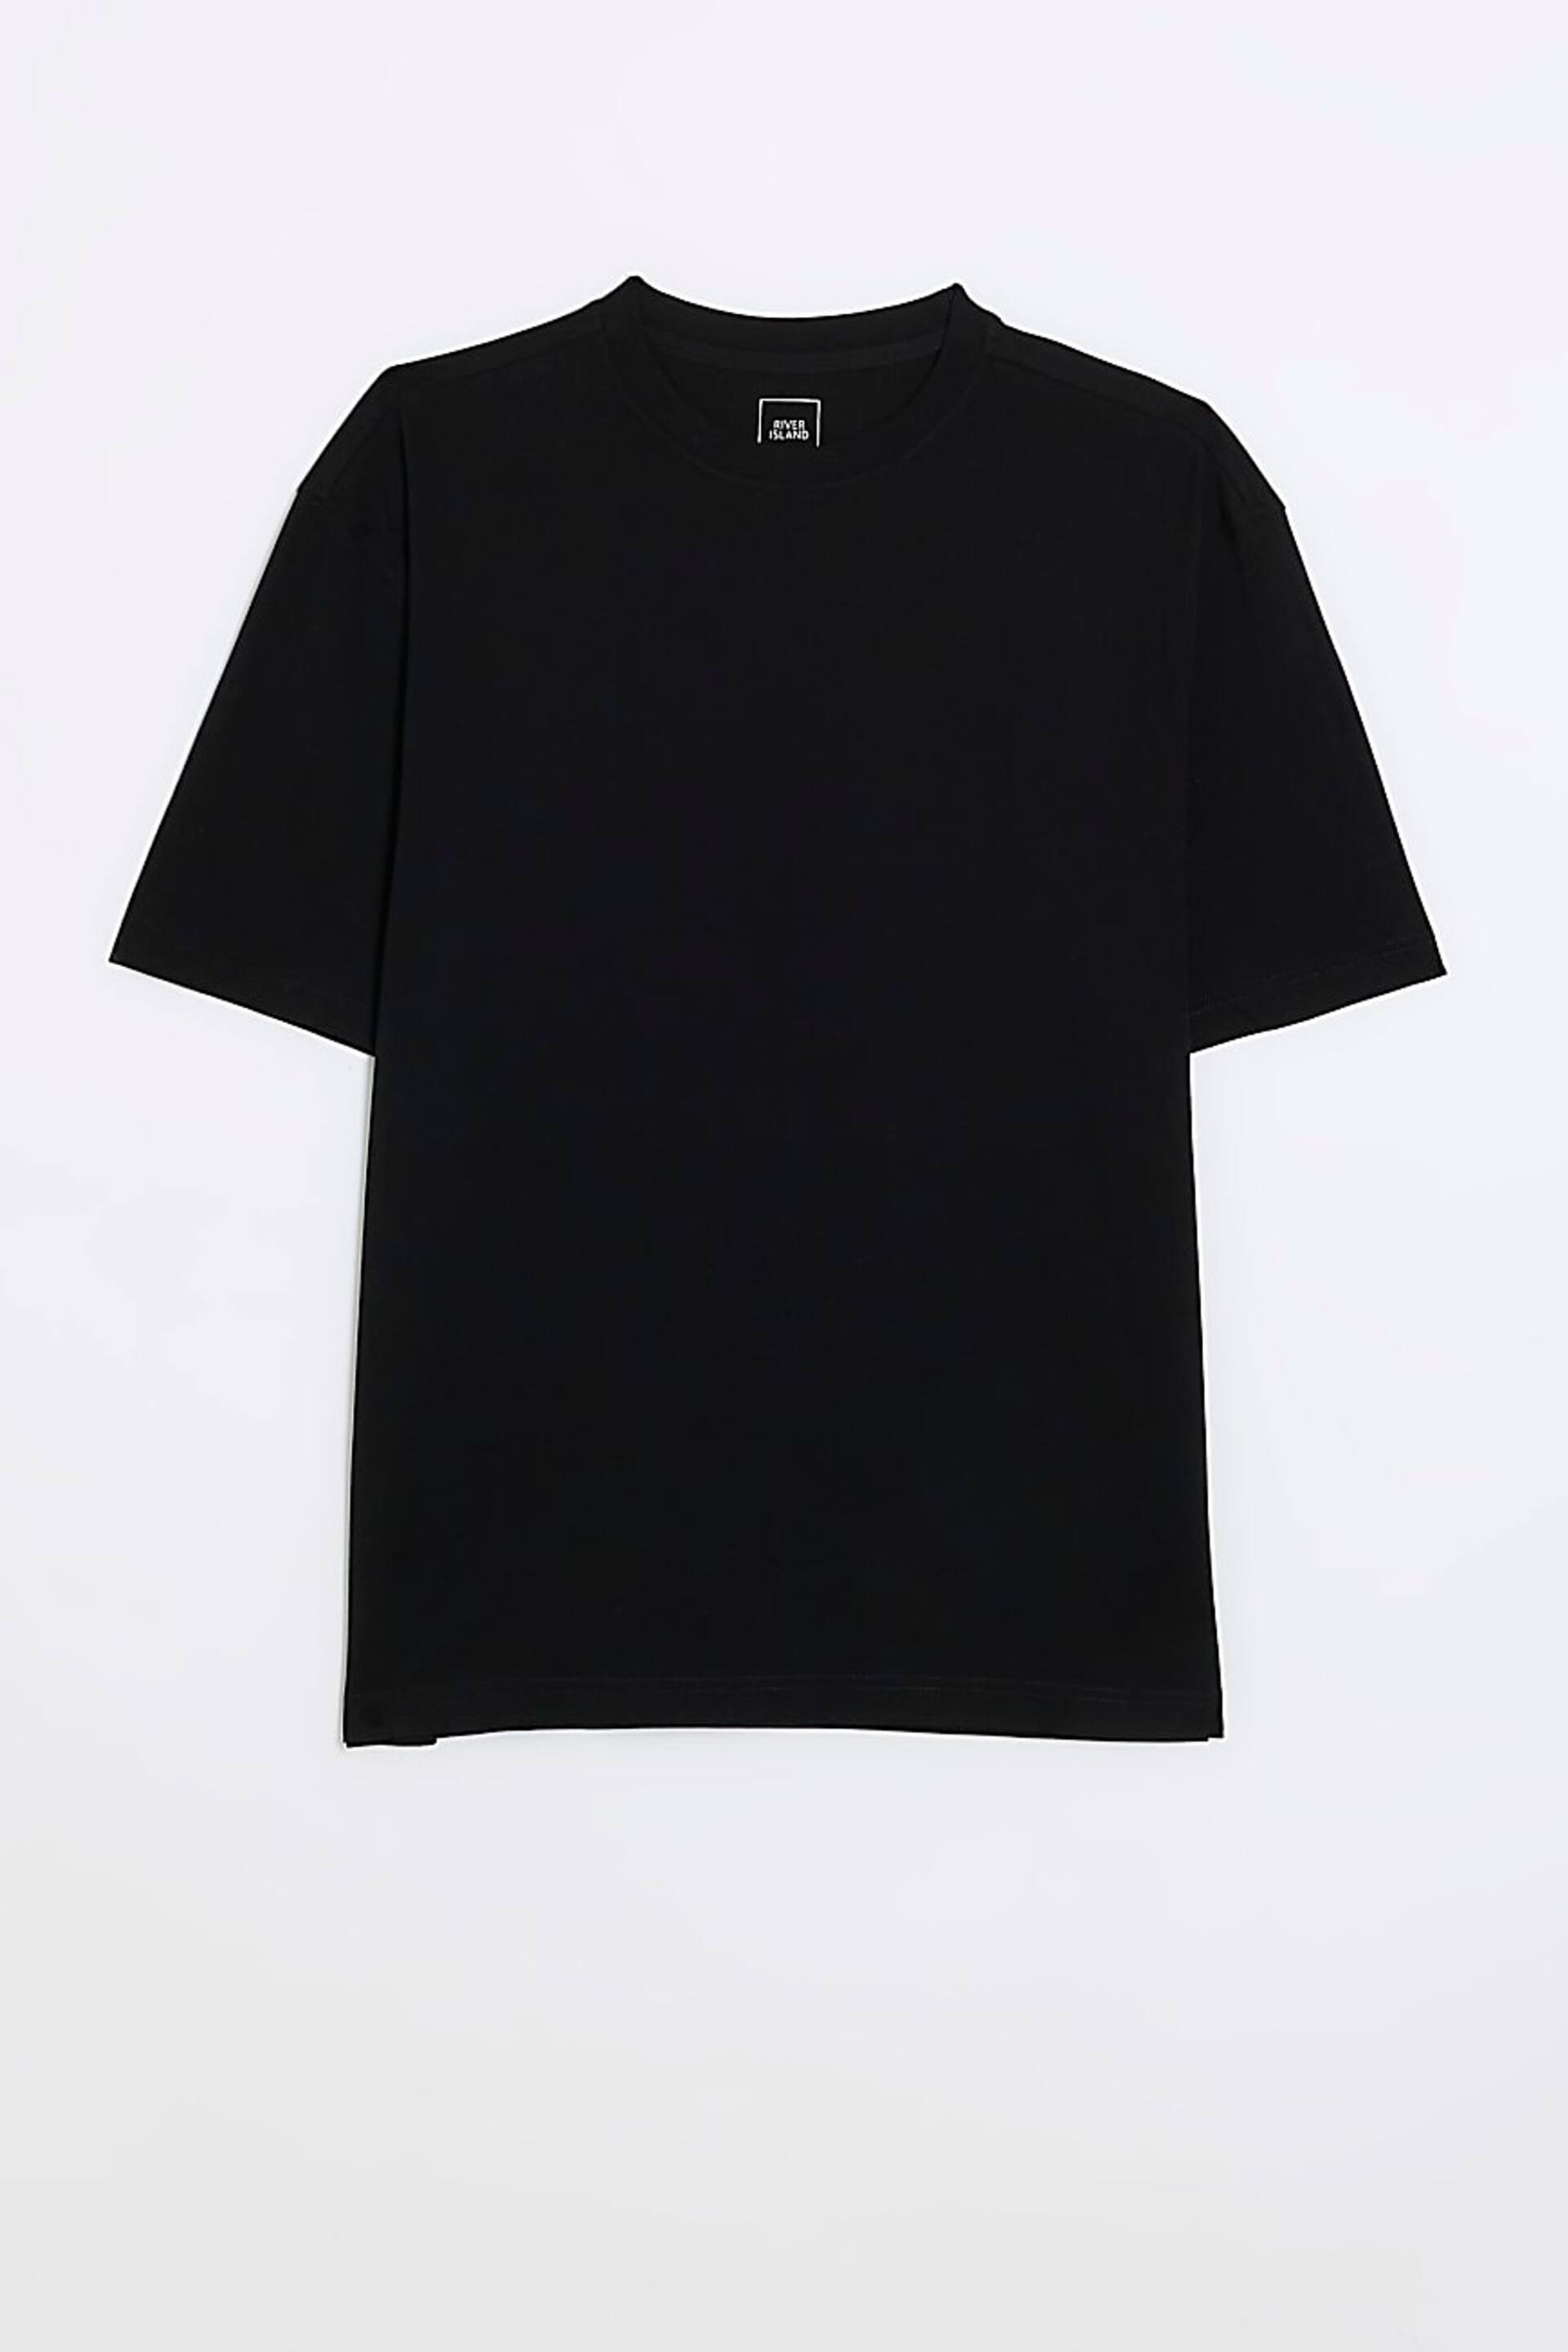 River Island Black Regular Fit T-Shirt - Image 5 of 6